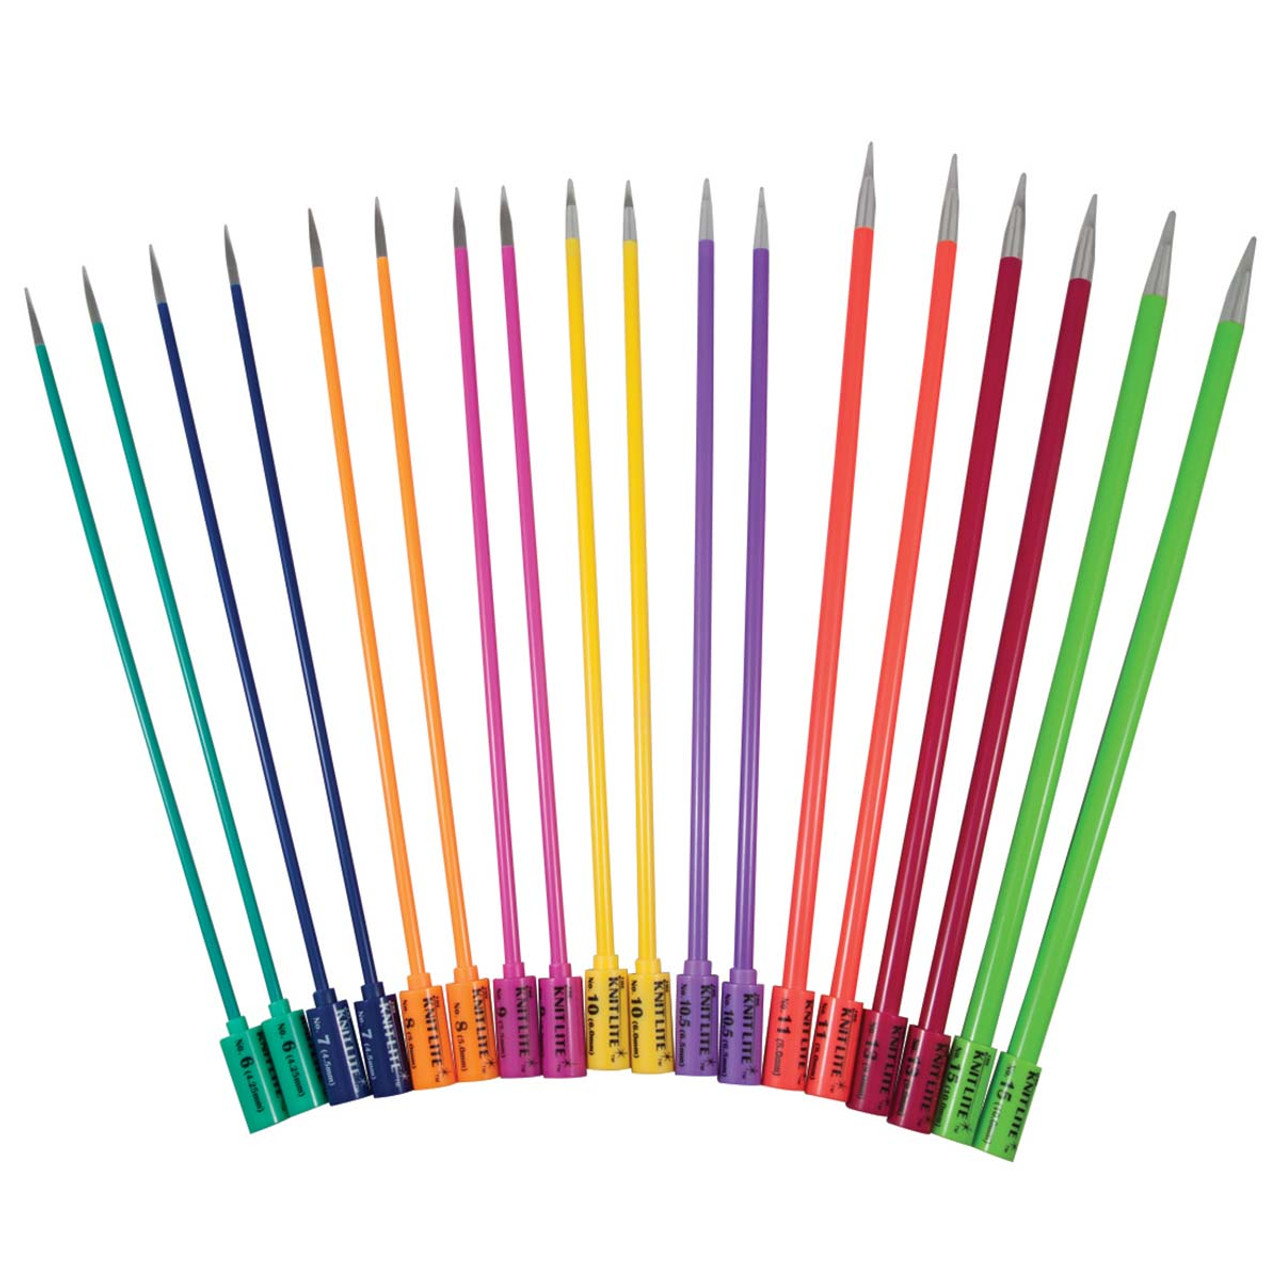 Takumi Bamboo Single Point Knitting Needles 13 To 14-Size 8/5mm